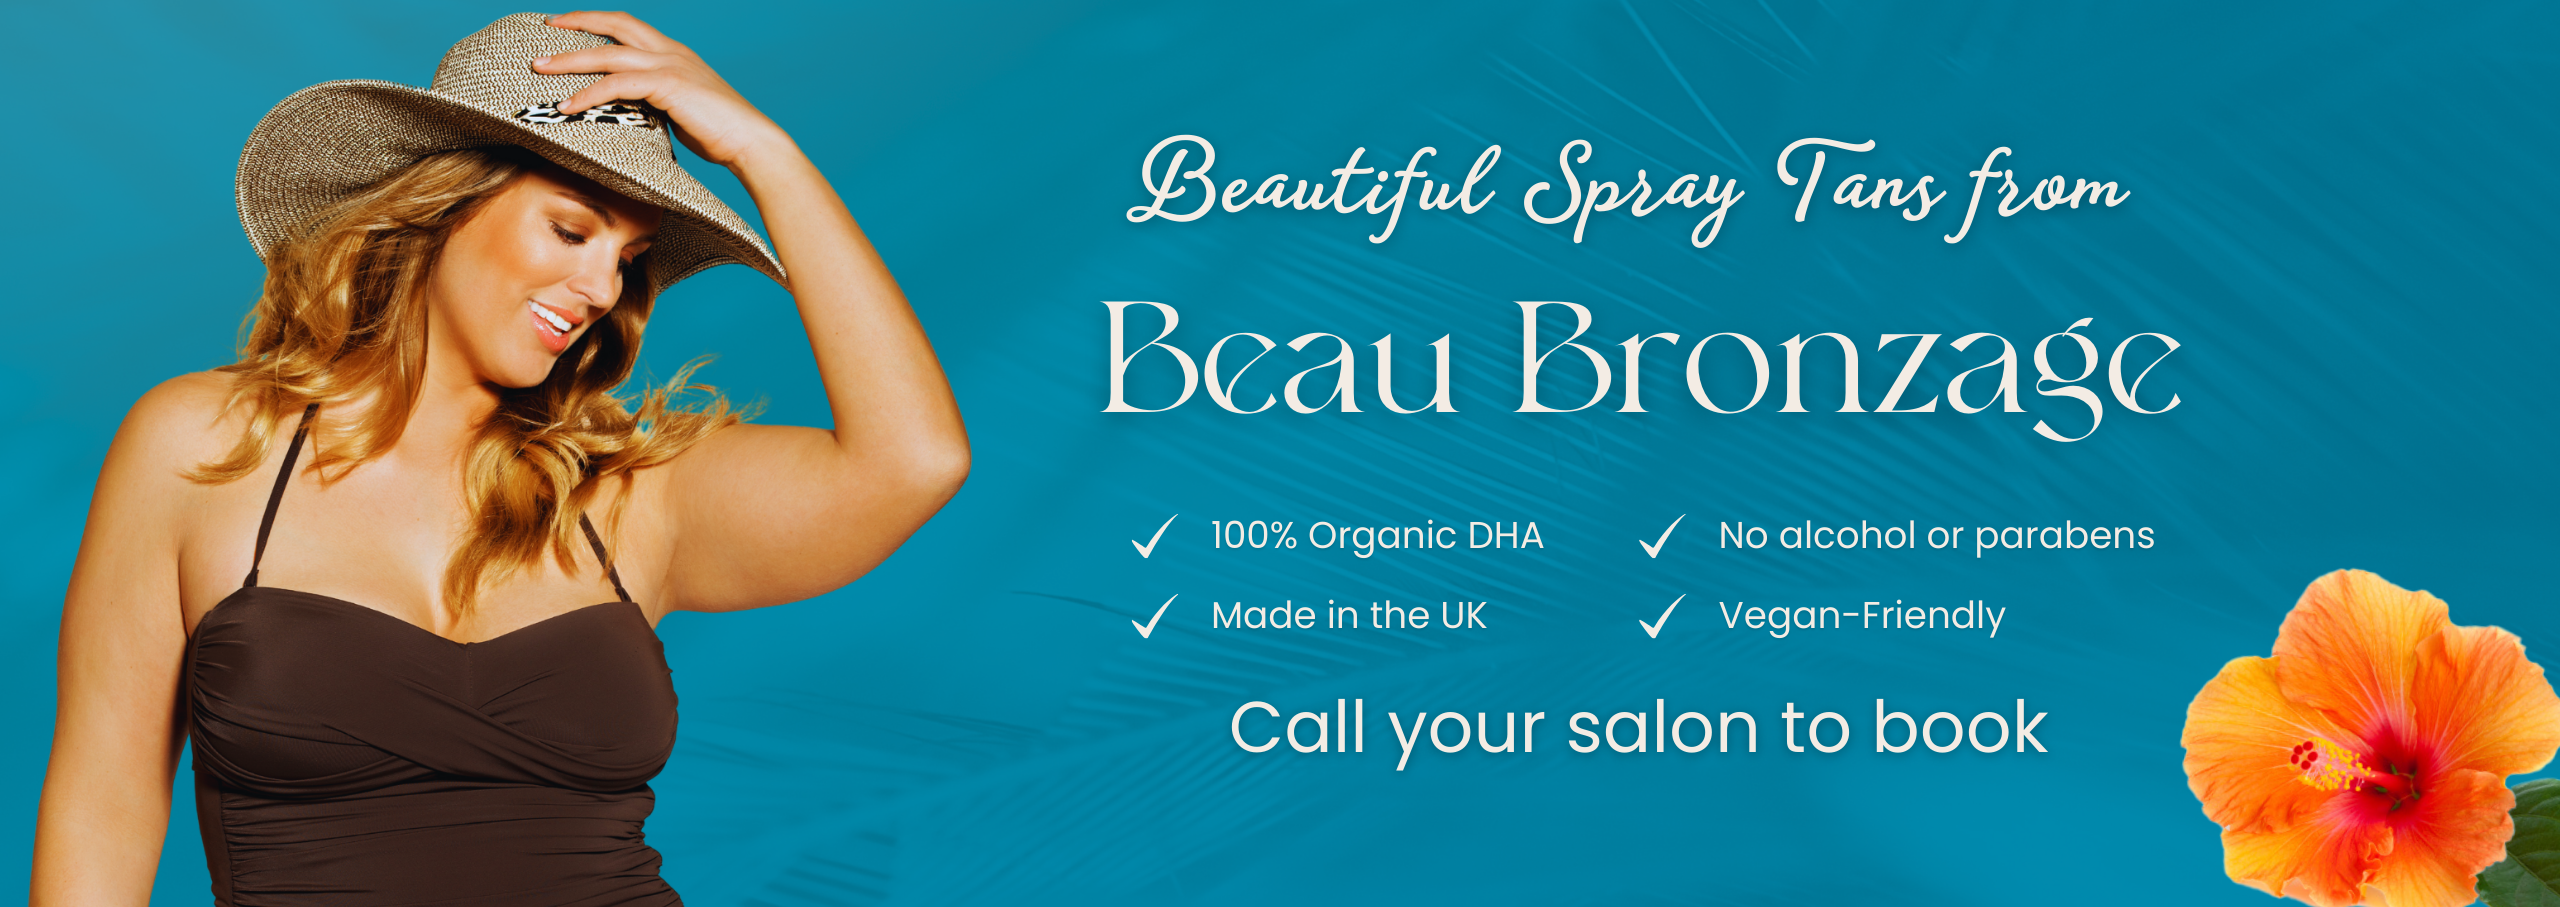 Beautiful Spray Tans from Beau Bronzage - vegan, organic DHA that's cruelty-free